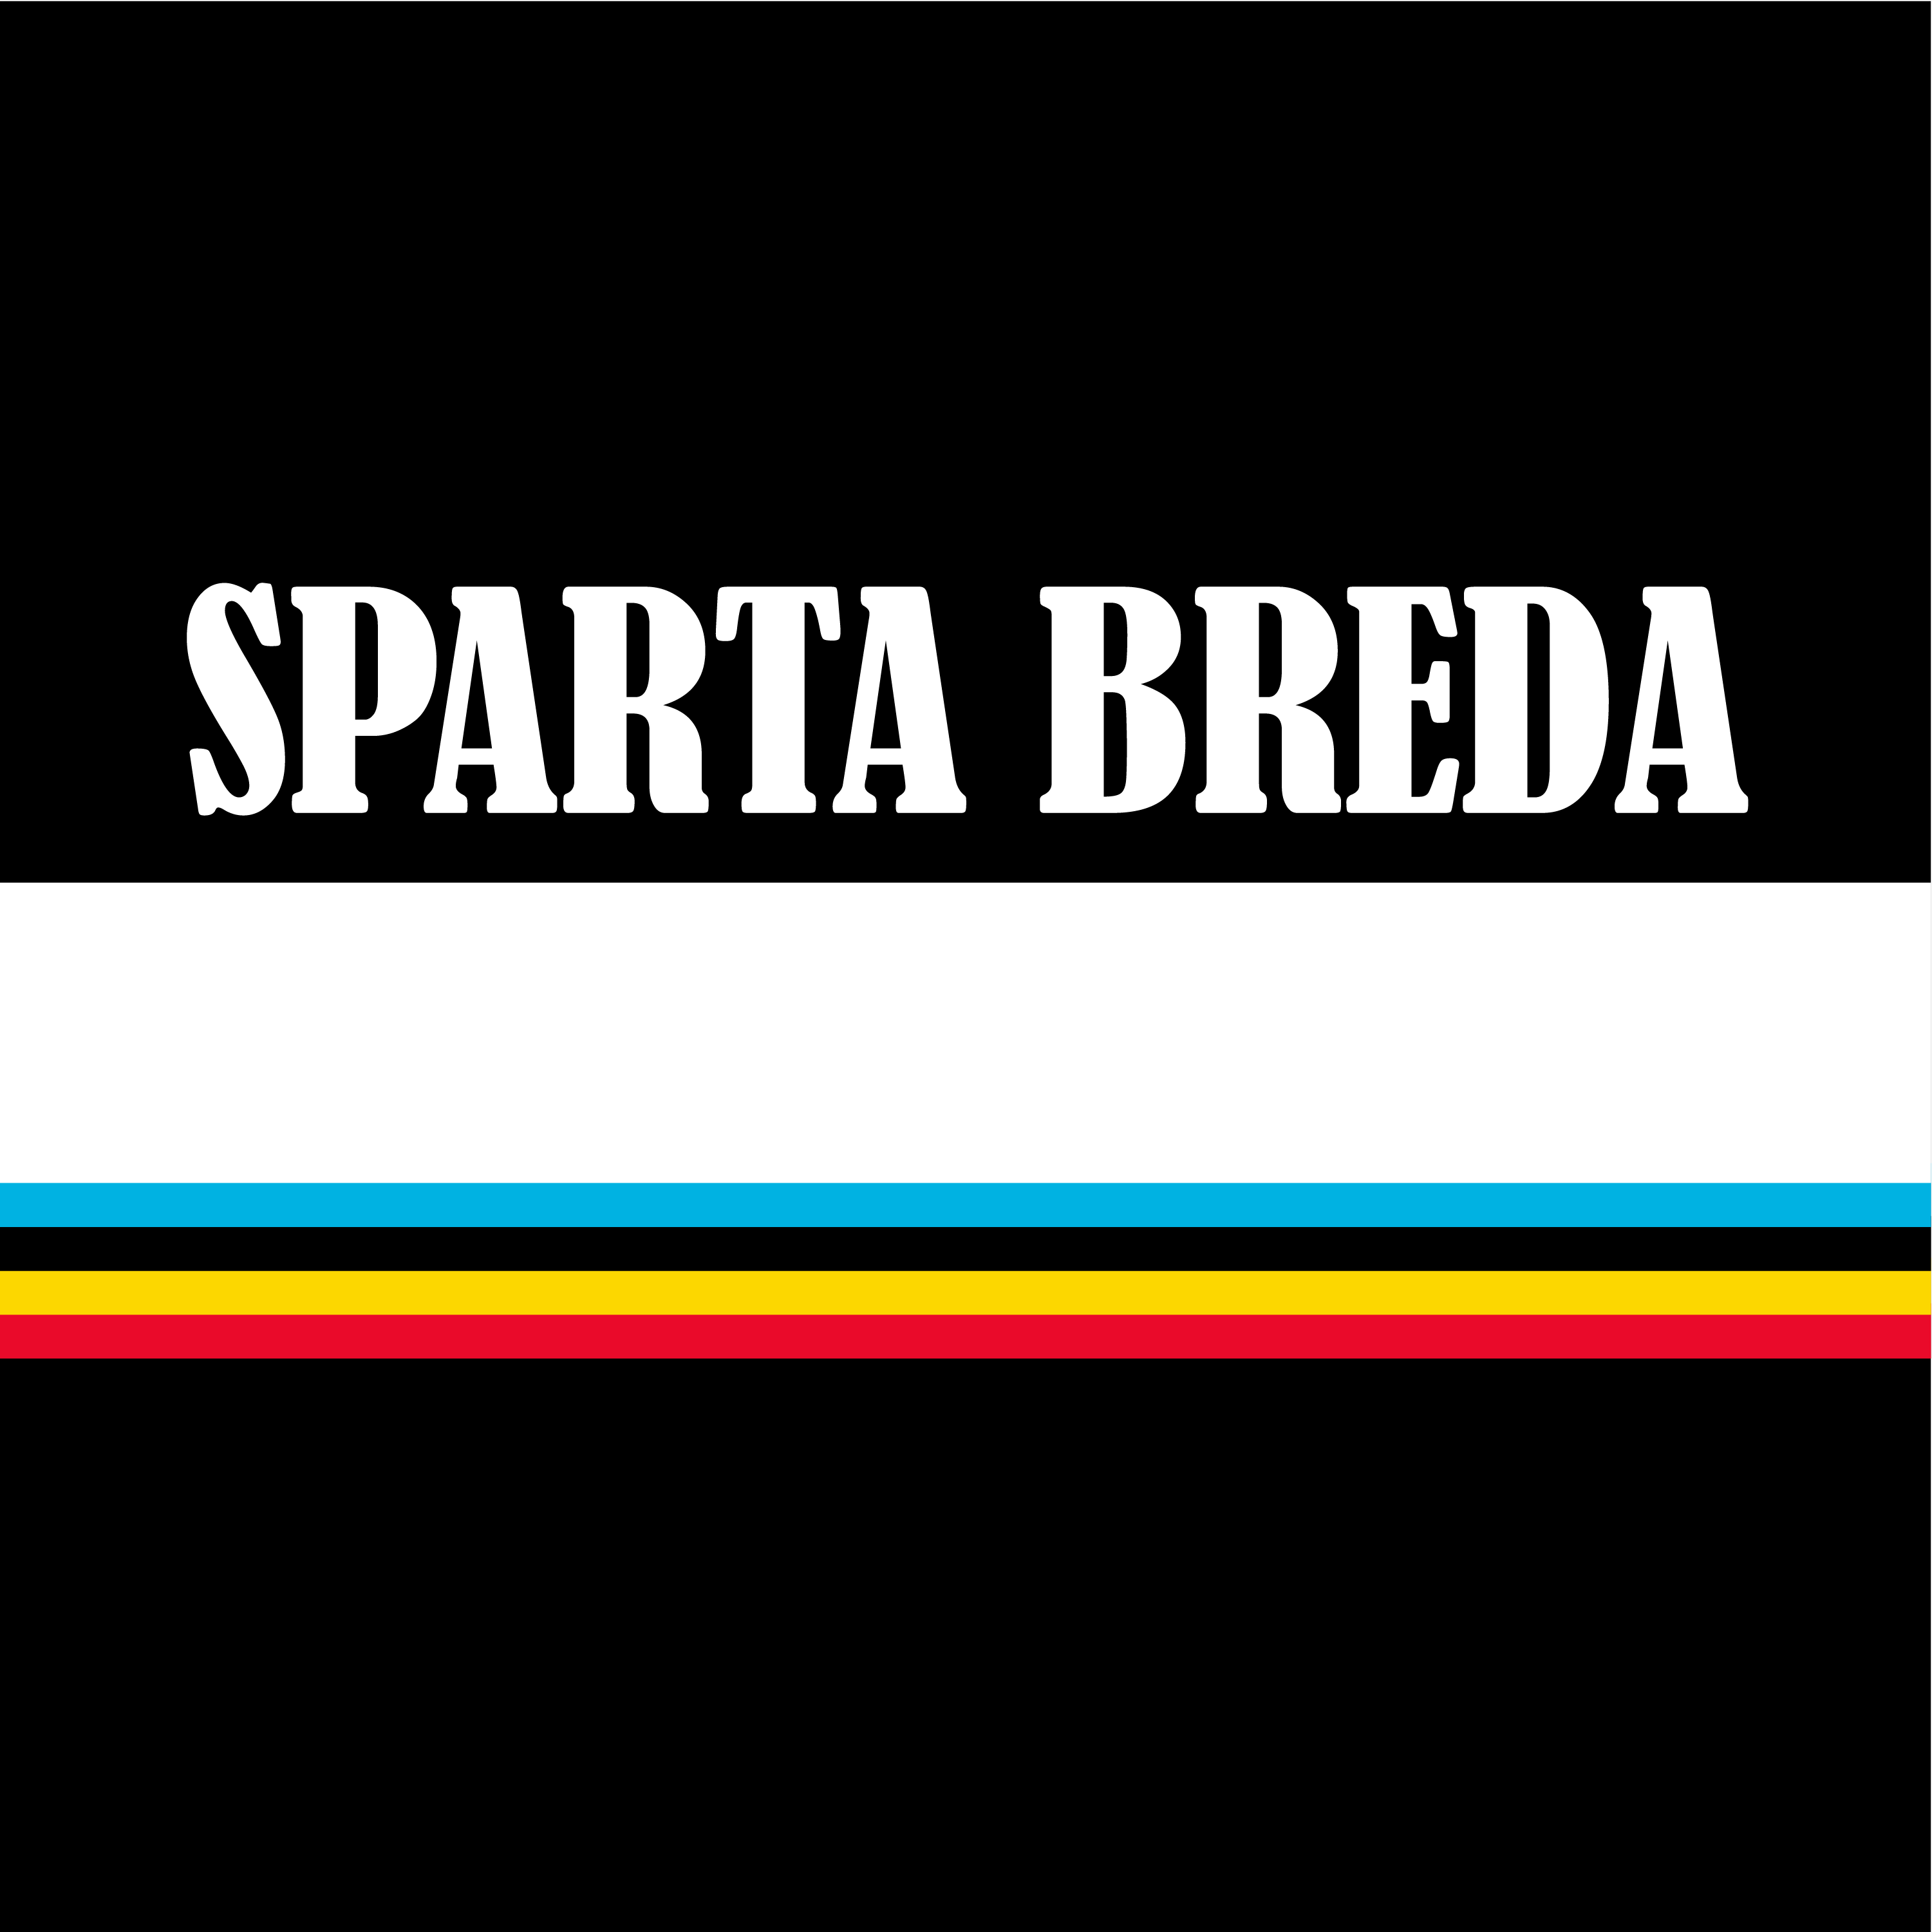 Club Image for SPARTA BREDA